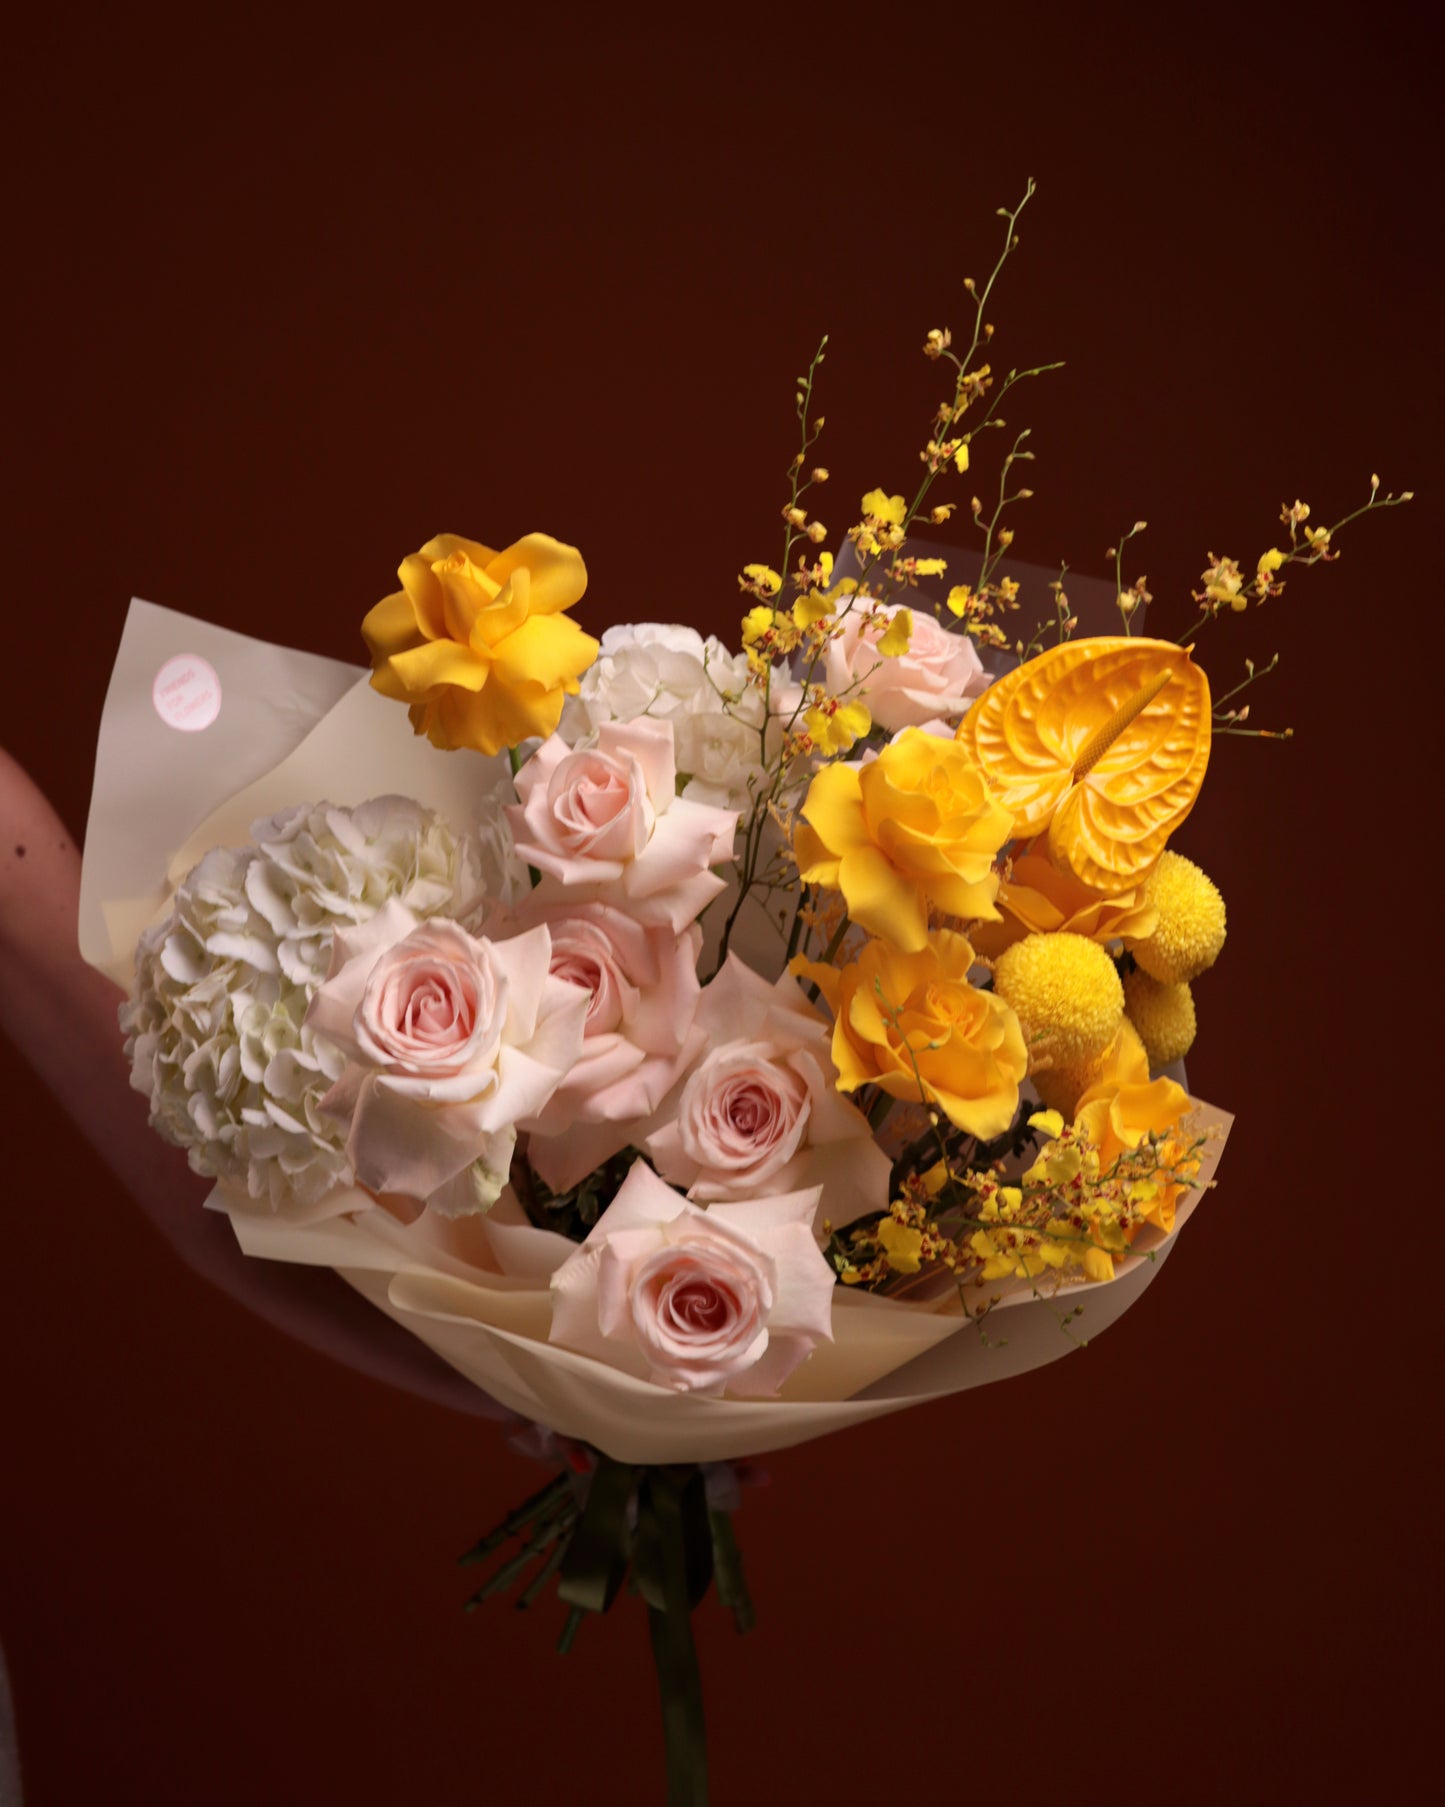 Bouquet "Golden ratio"